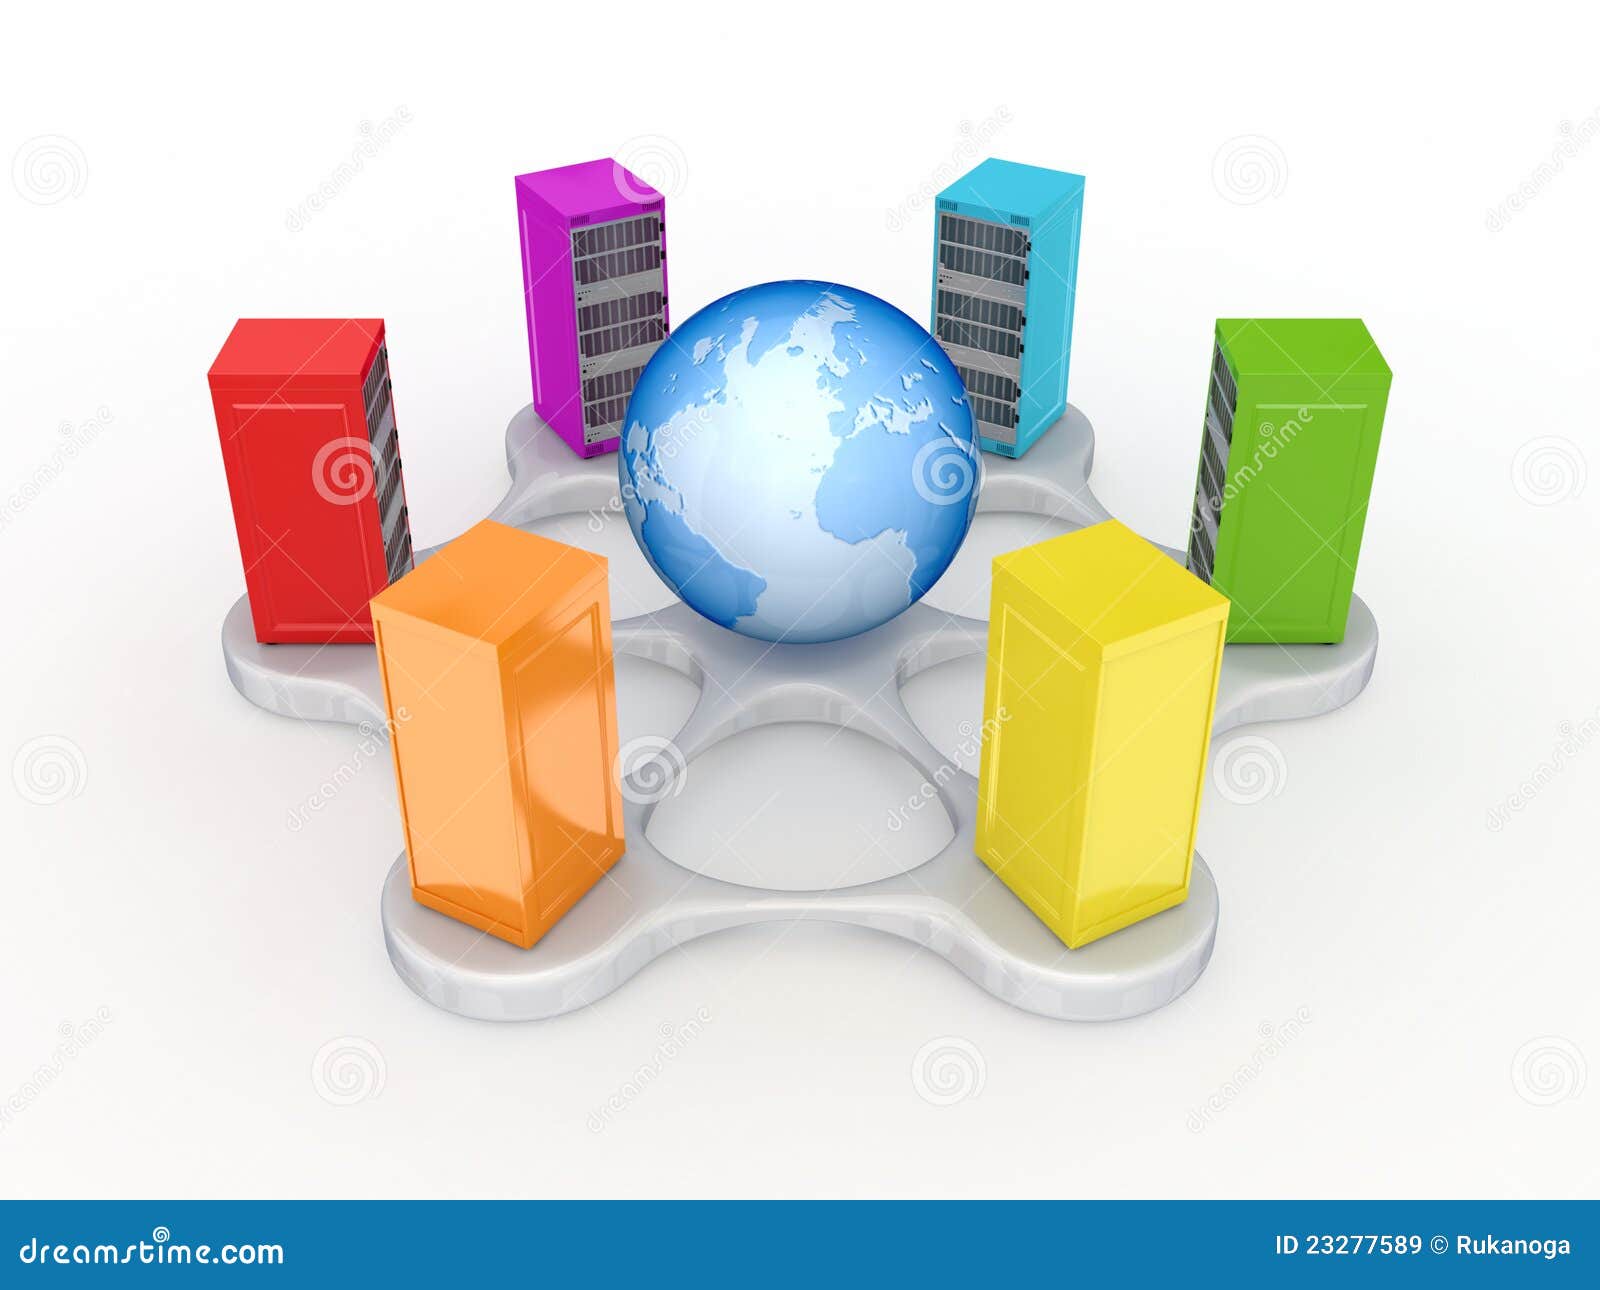 colorful-servers-around-globe-23277589-3795775377.jpg